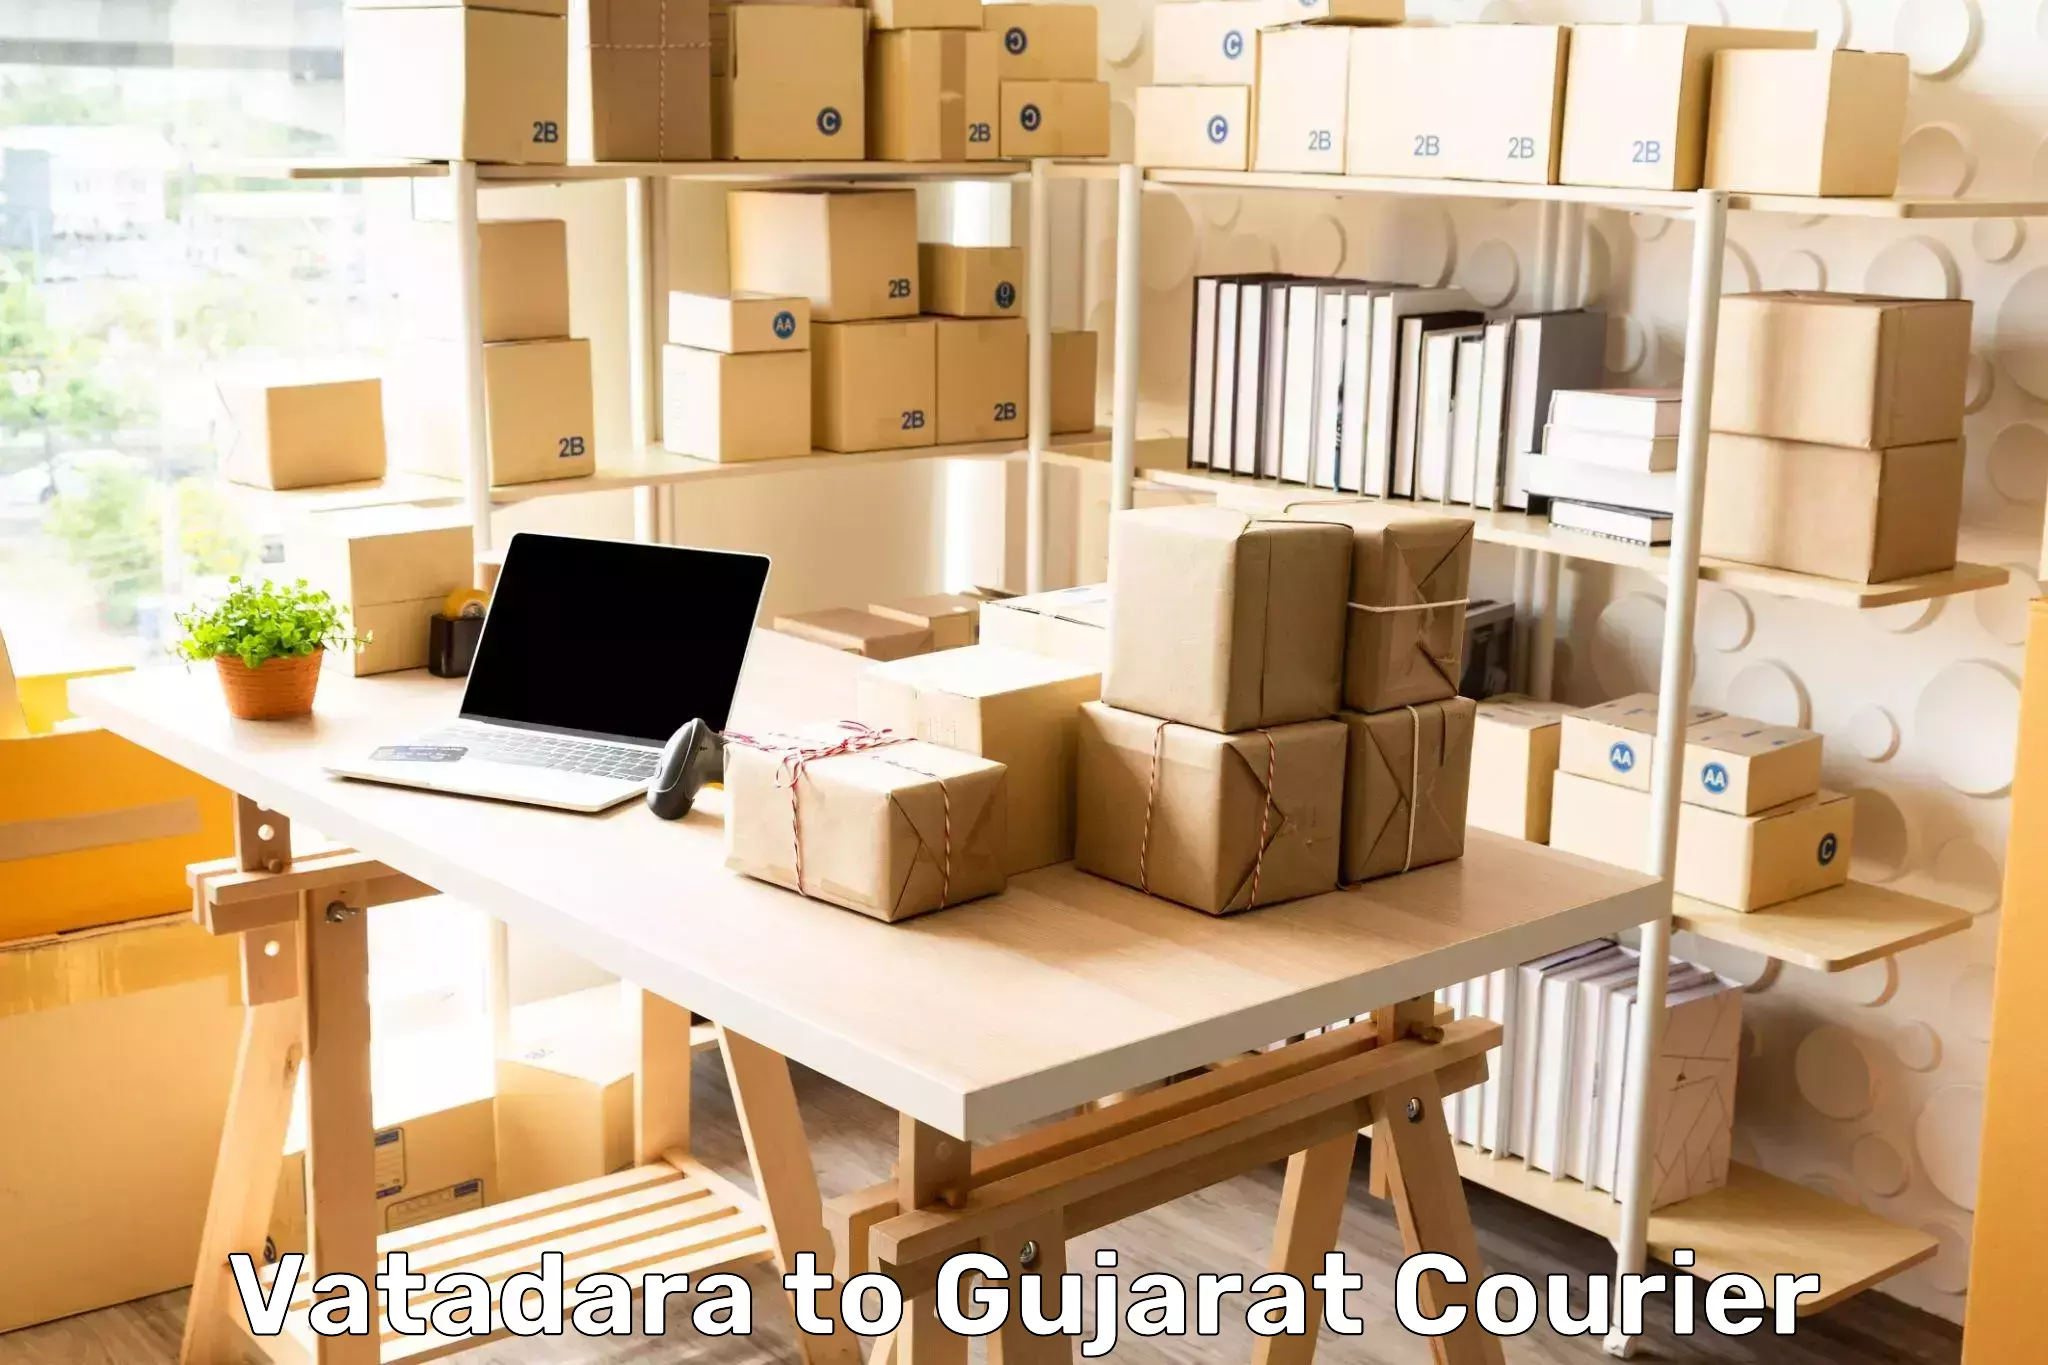 Bulk courier orders Vatadara to Gujarat